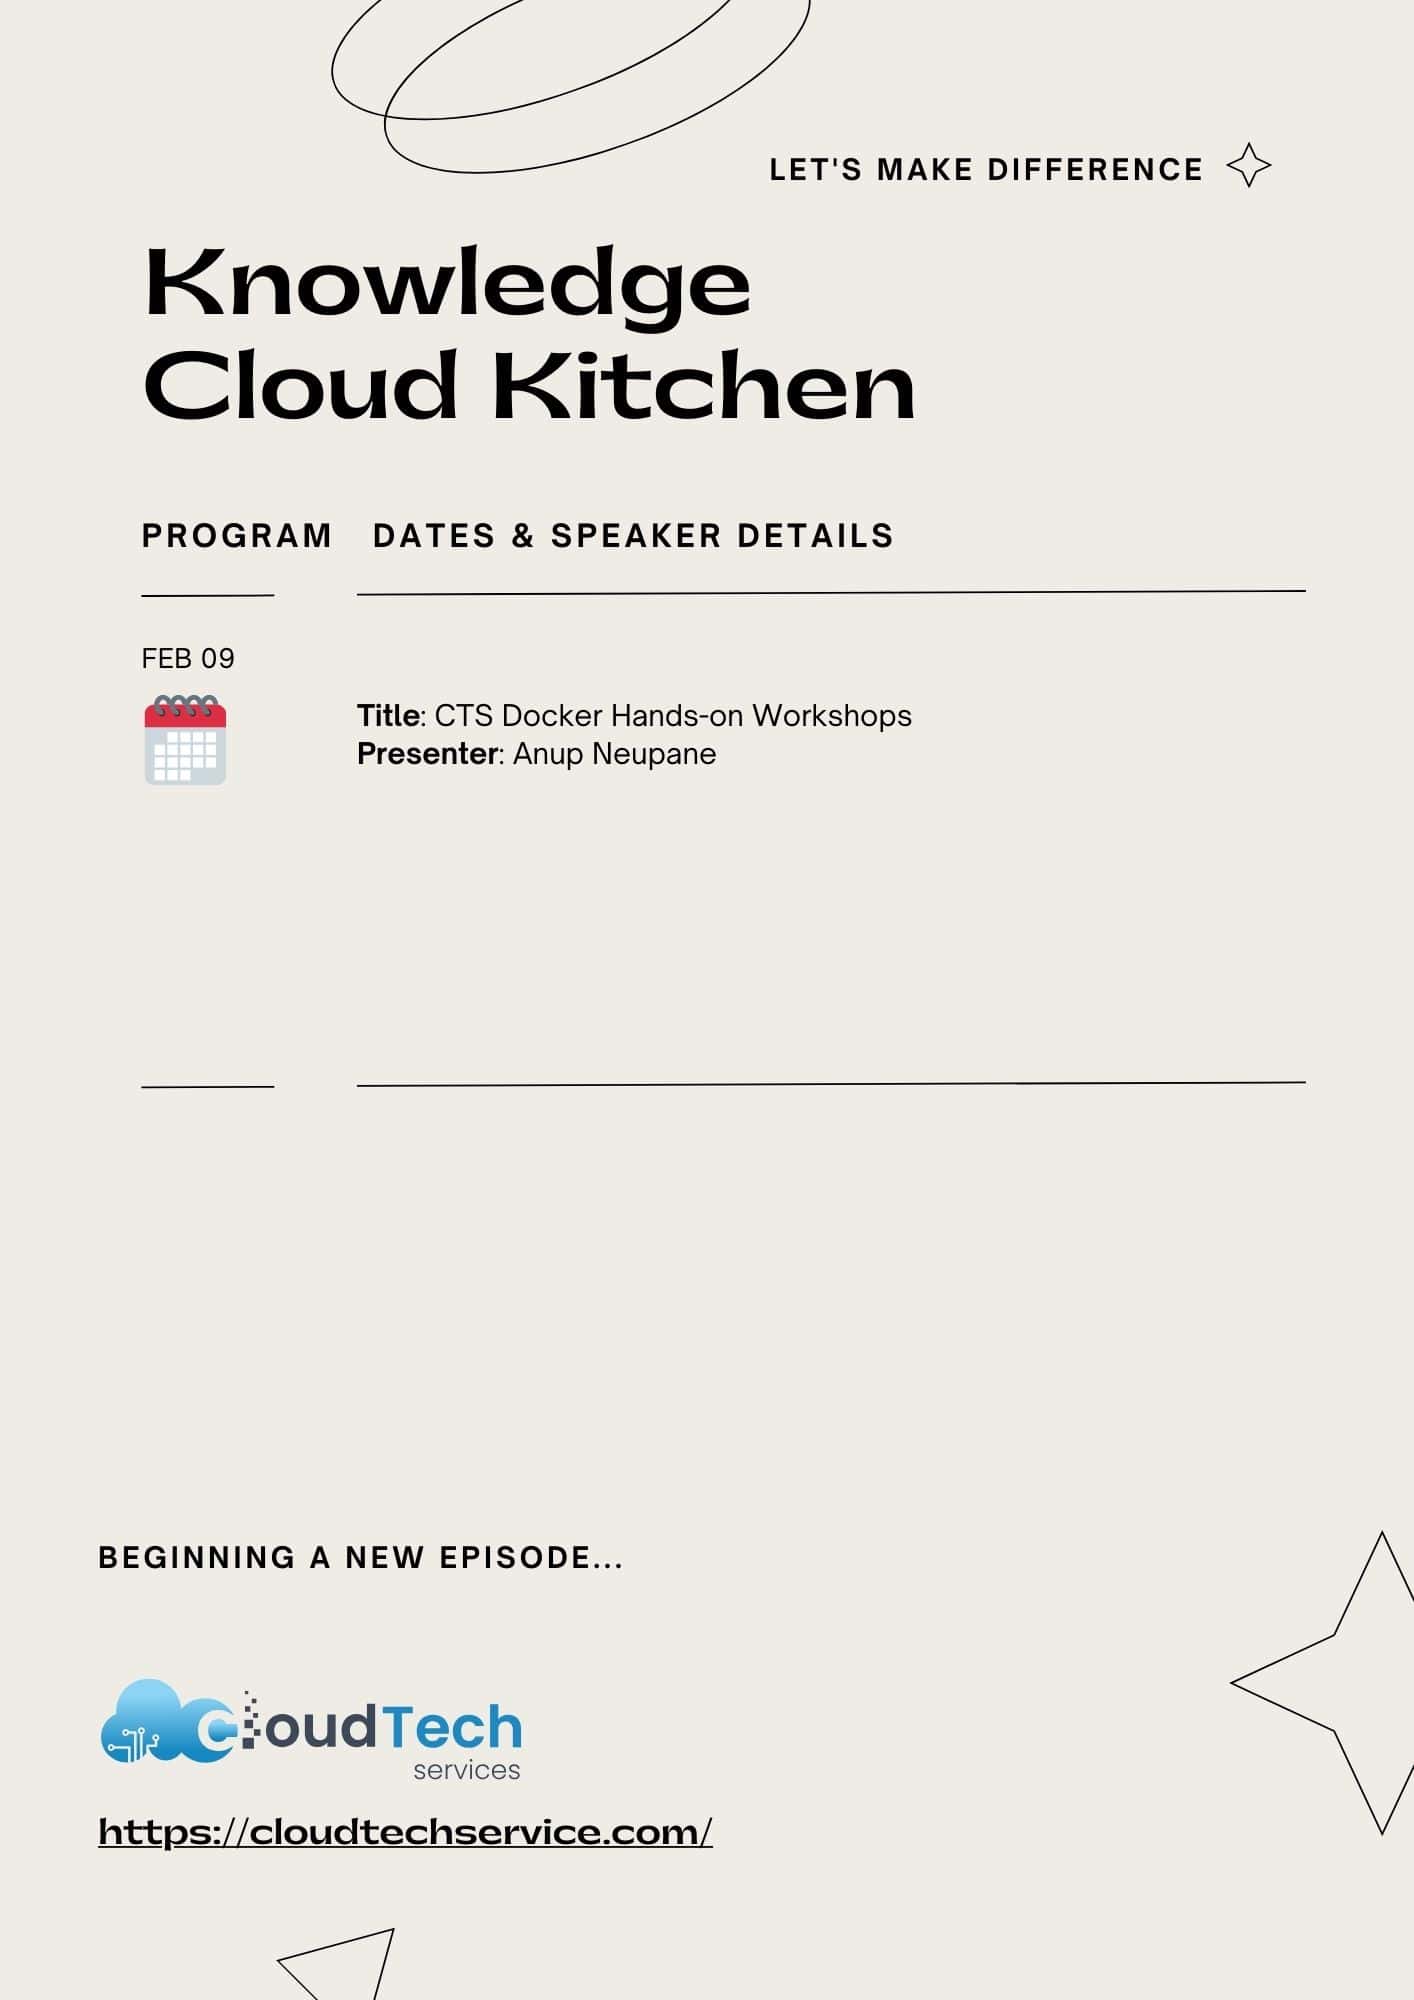 Knowledge Cloud Kitchen